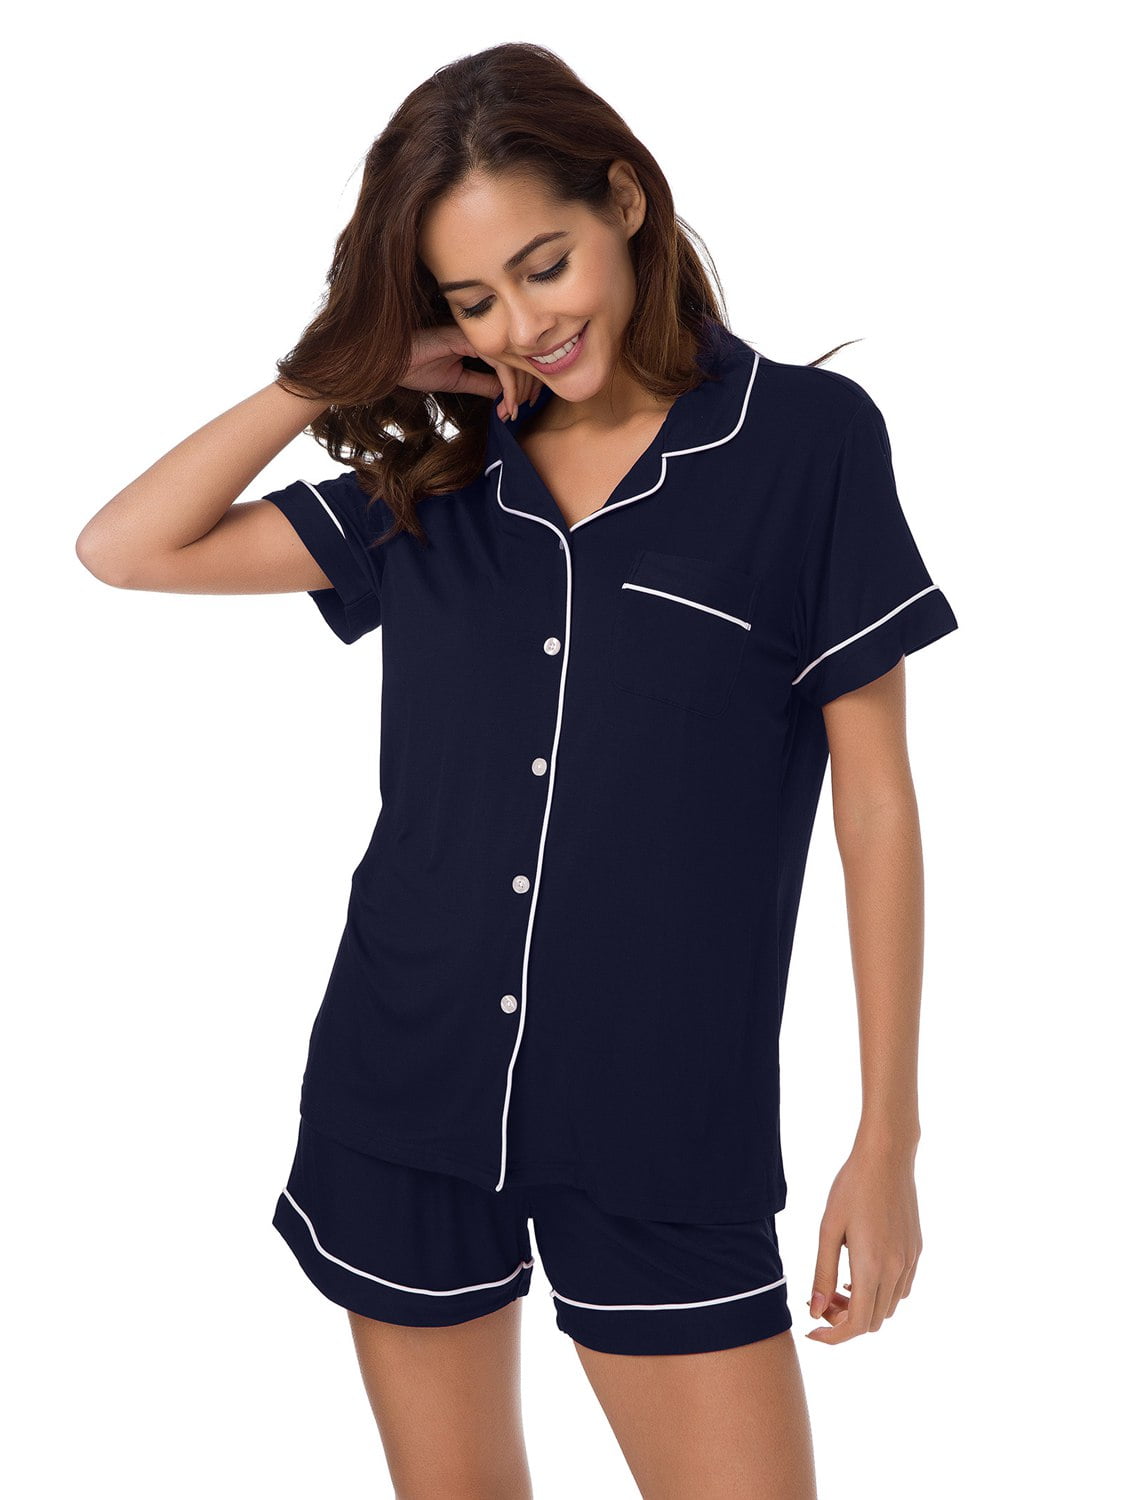 SIORO Women Short Pyjamas Sets Soft Pjs Sets for Womens Button Down Top Nightwear Loungewear 